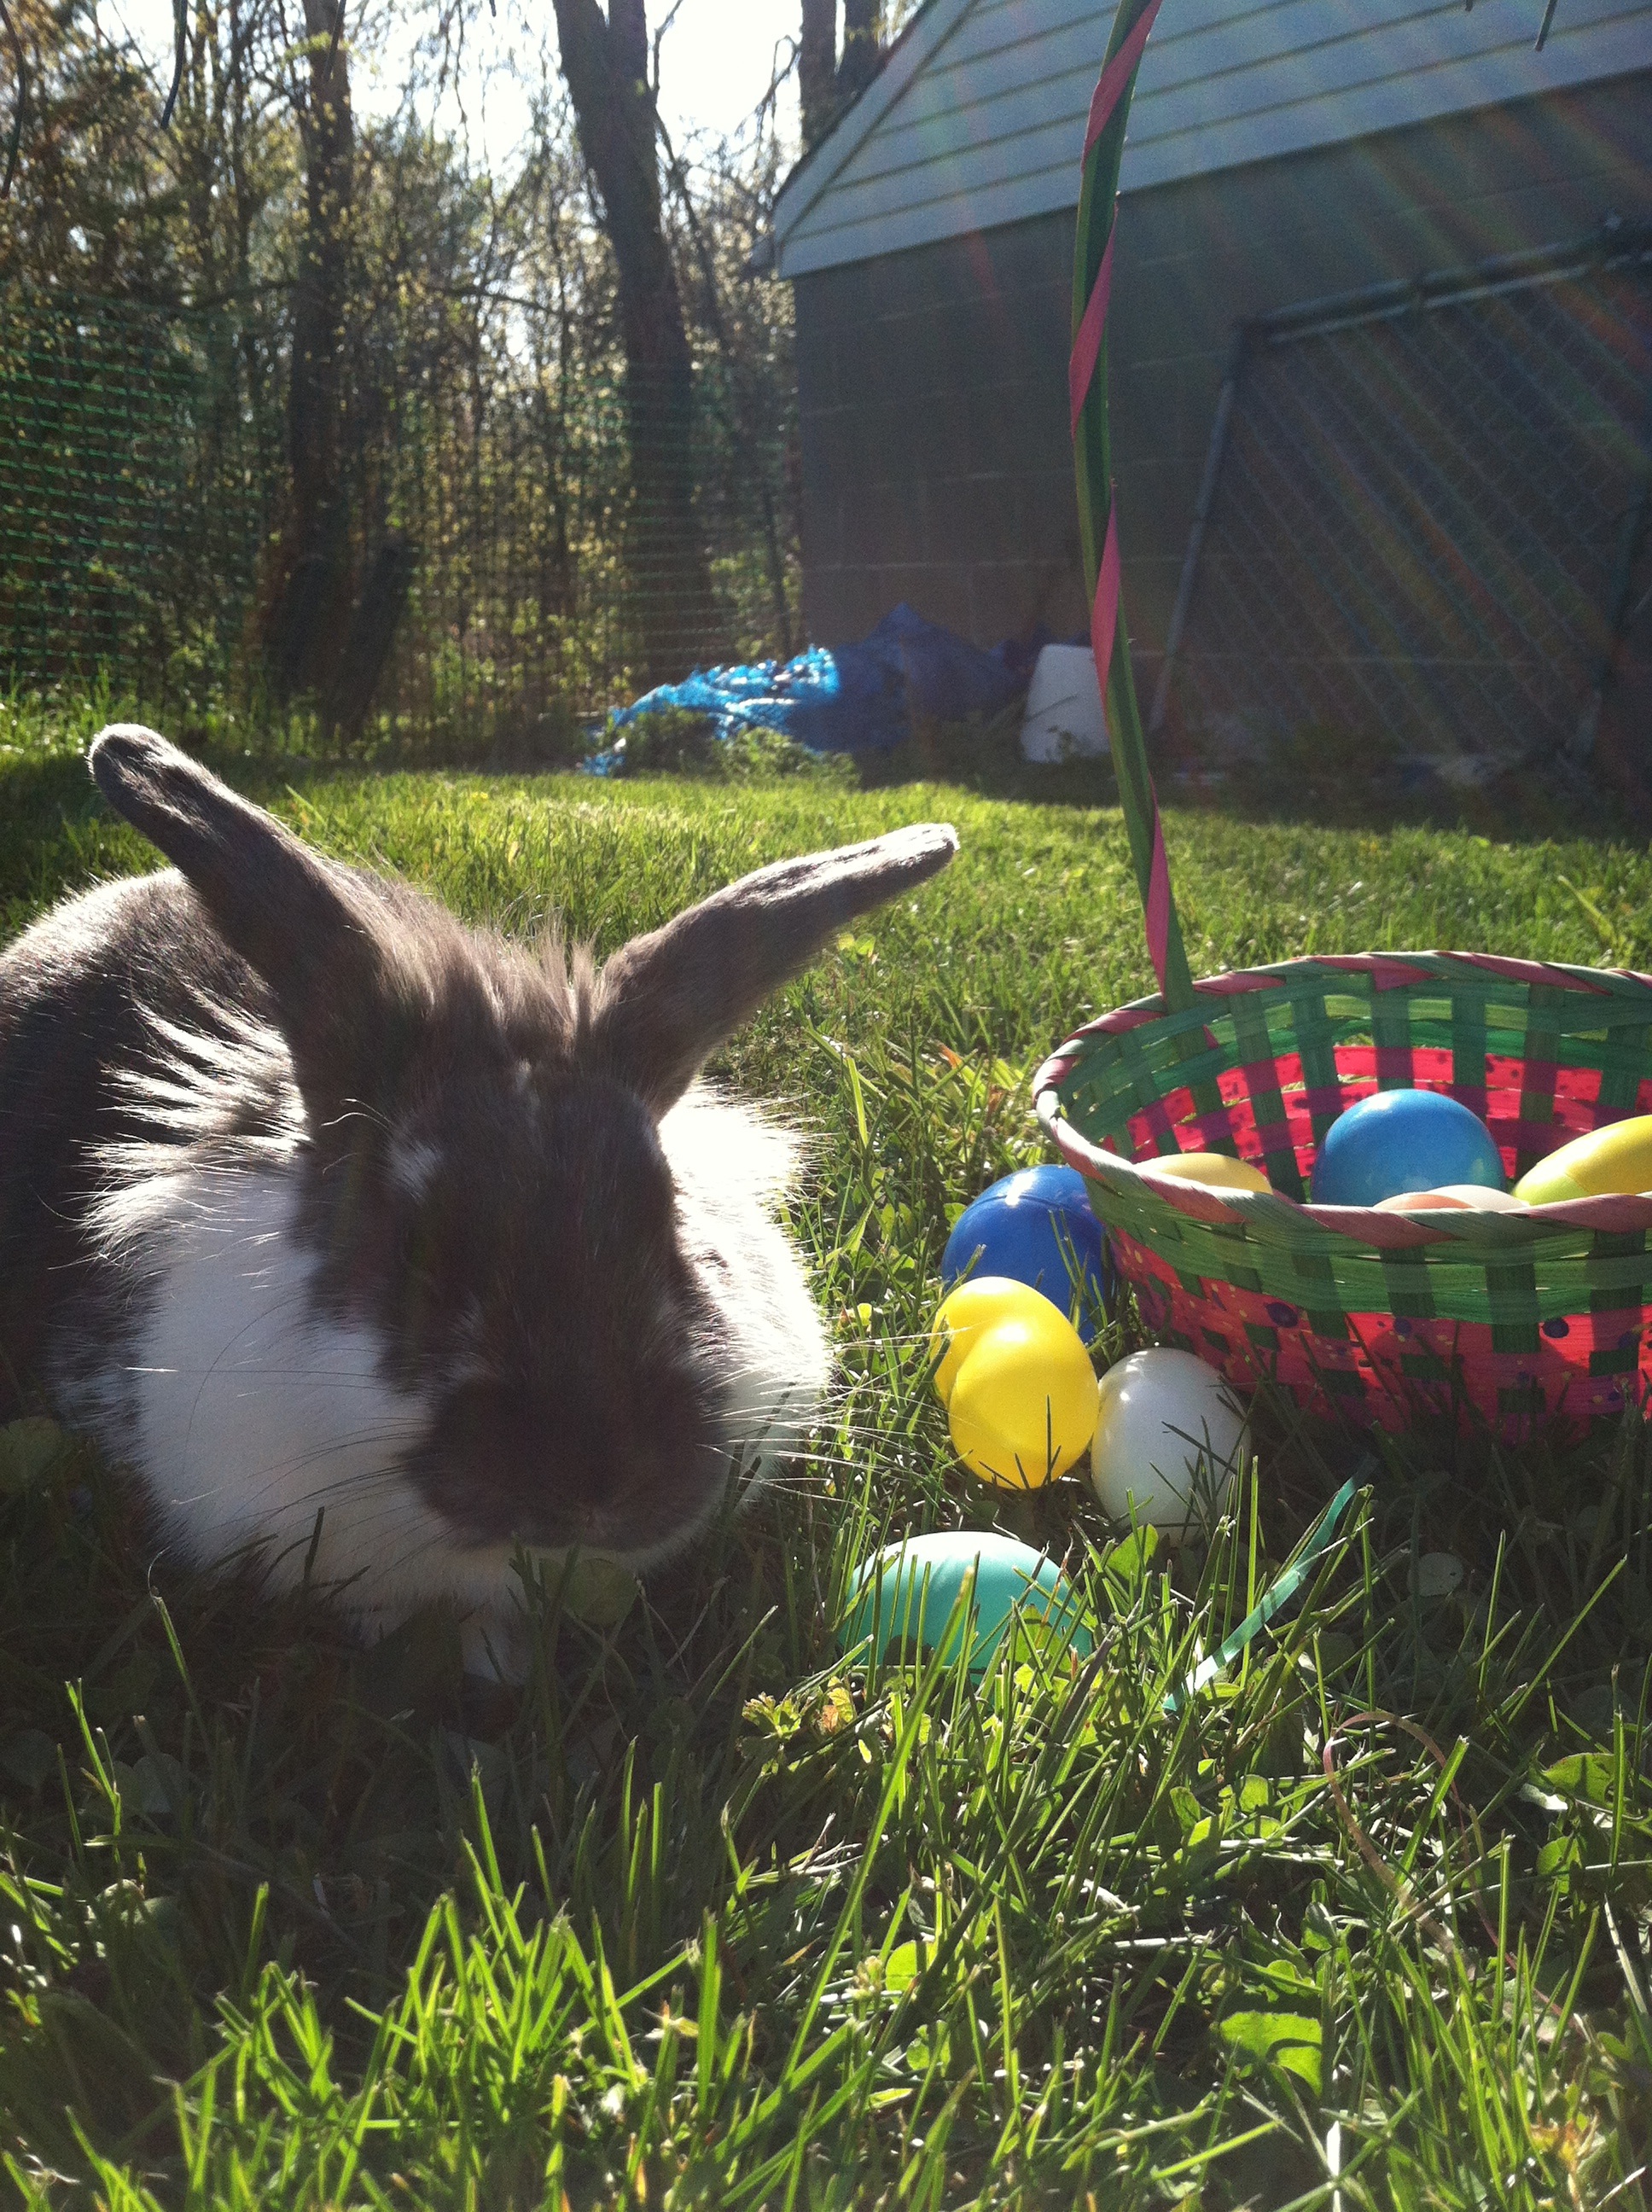 Bunny Is the Winner of the Easter Egg Hunt